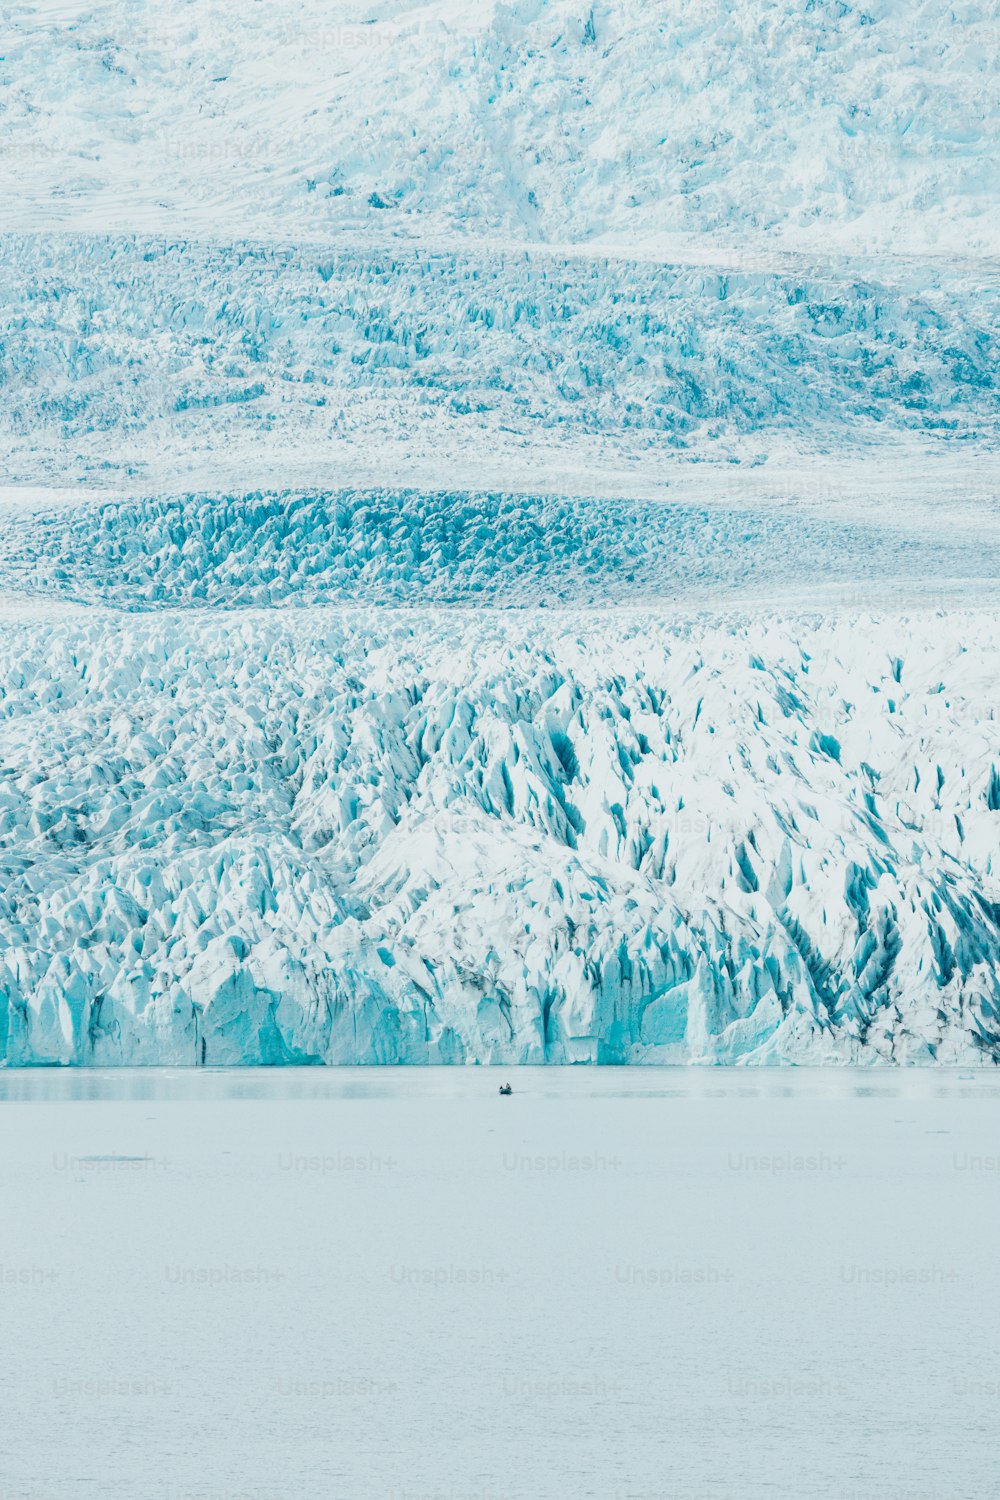 Un grupo de personas en un bote frente a un glaciar